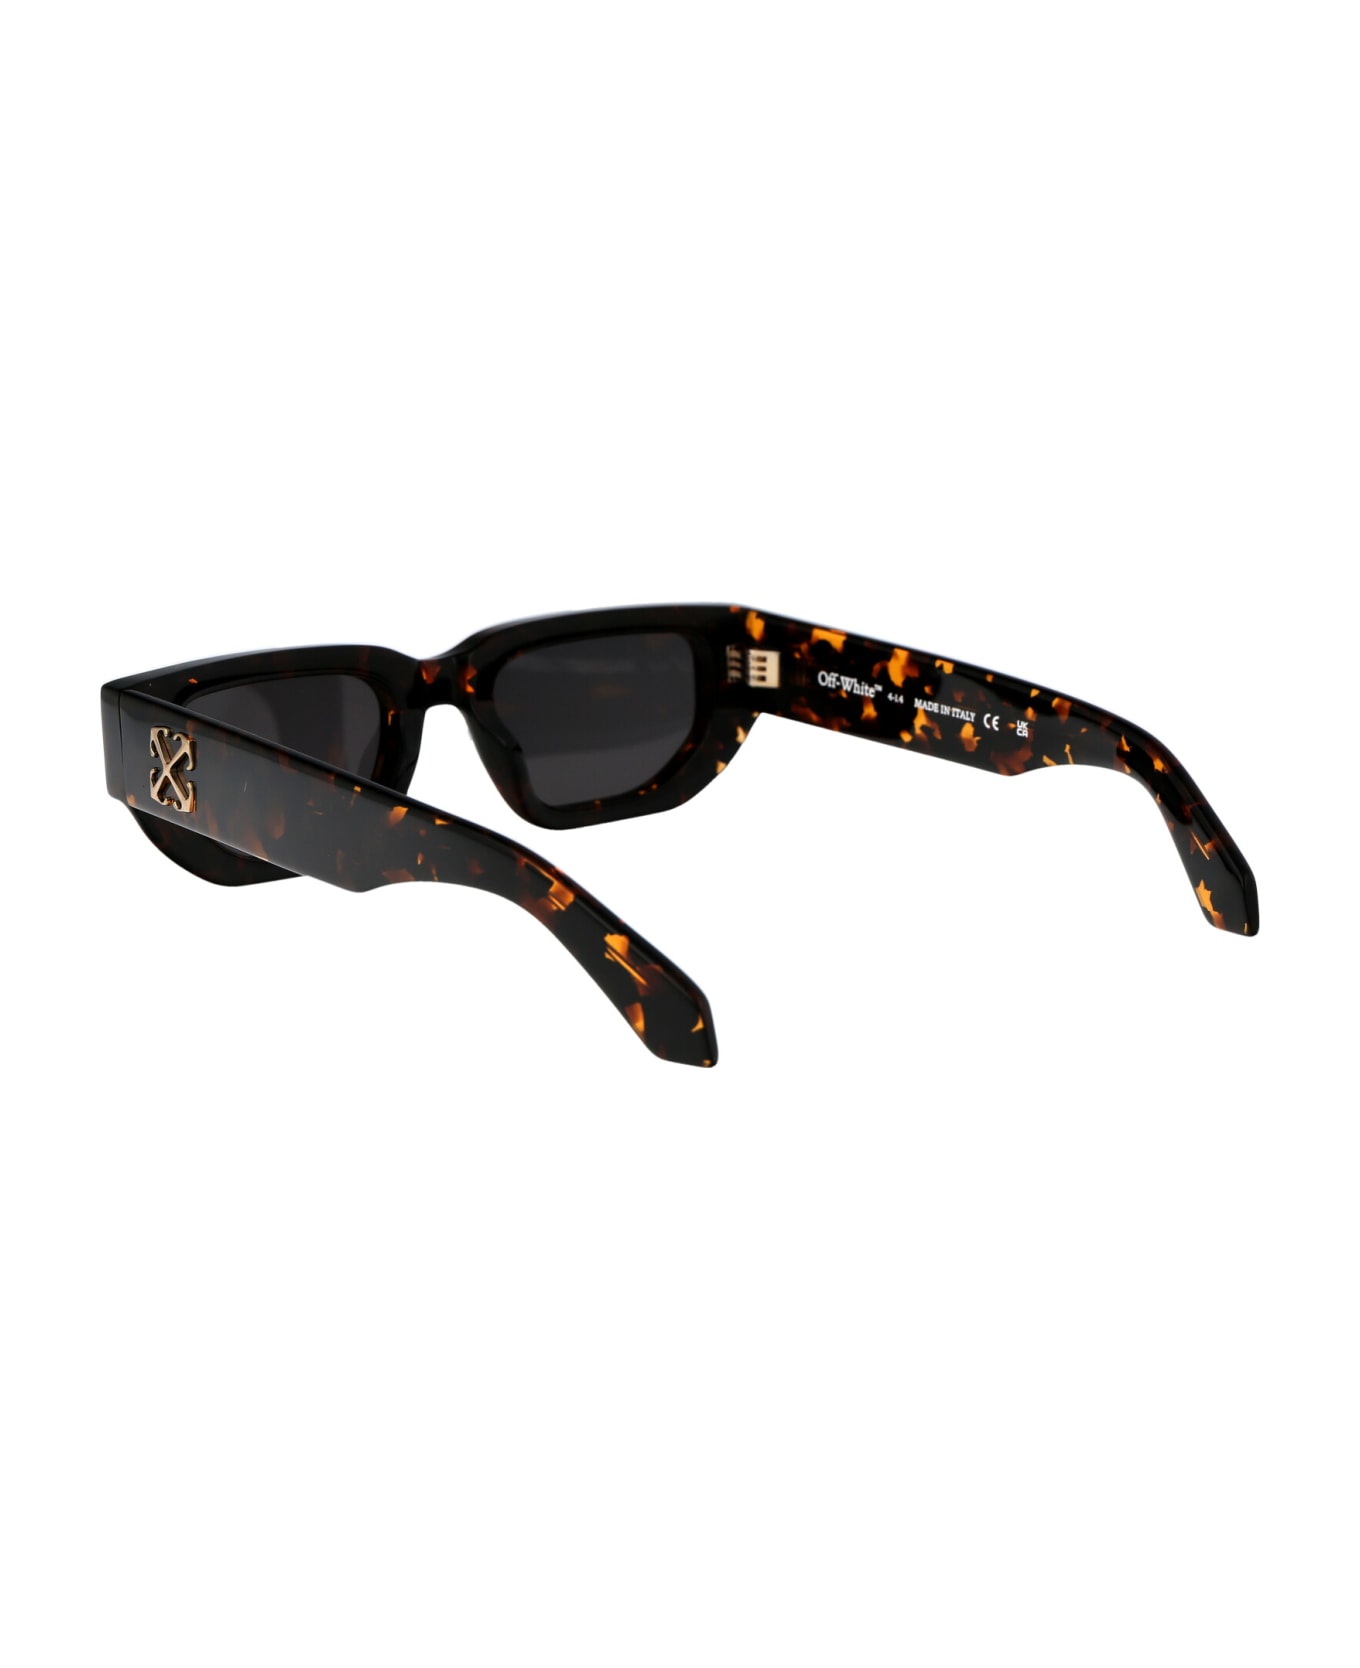 Off-White Greeley Sunglasses - 6007 HAVANA  